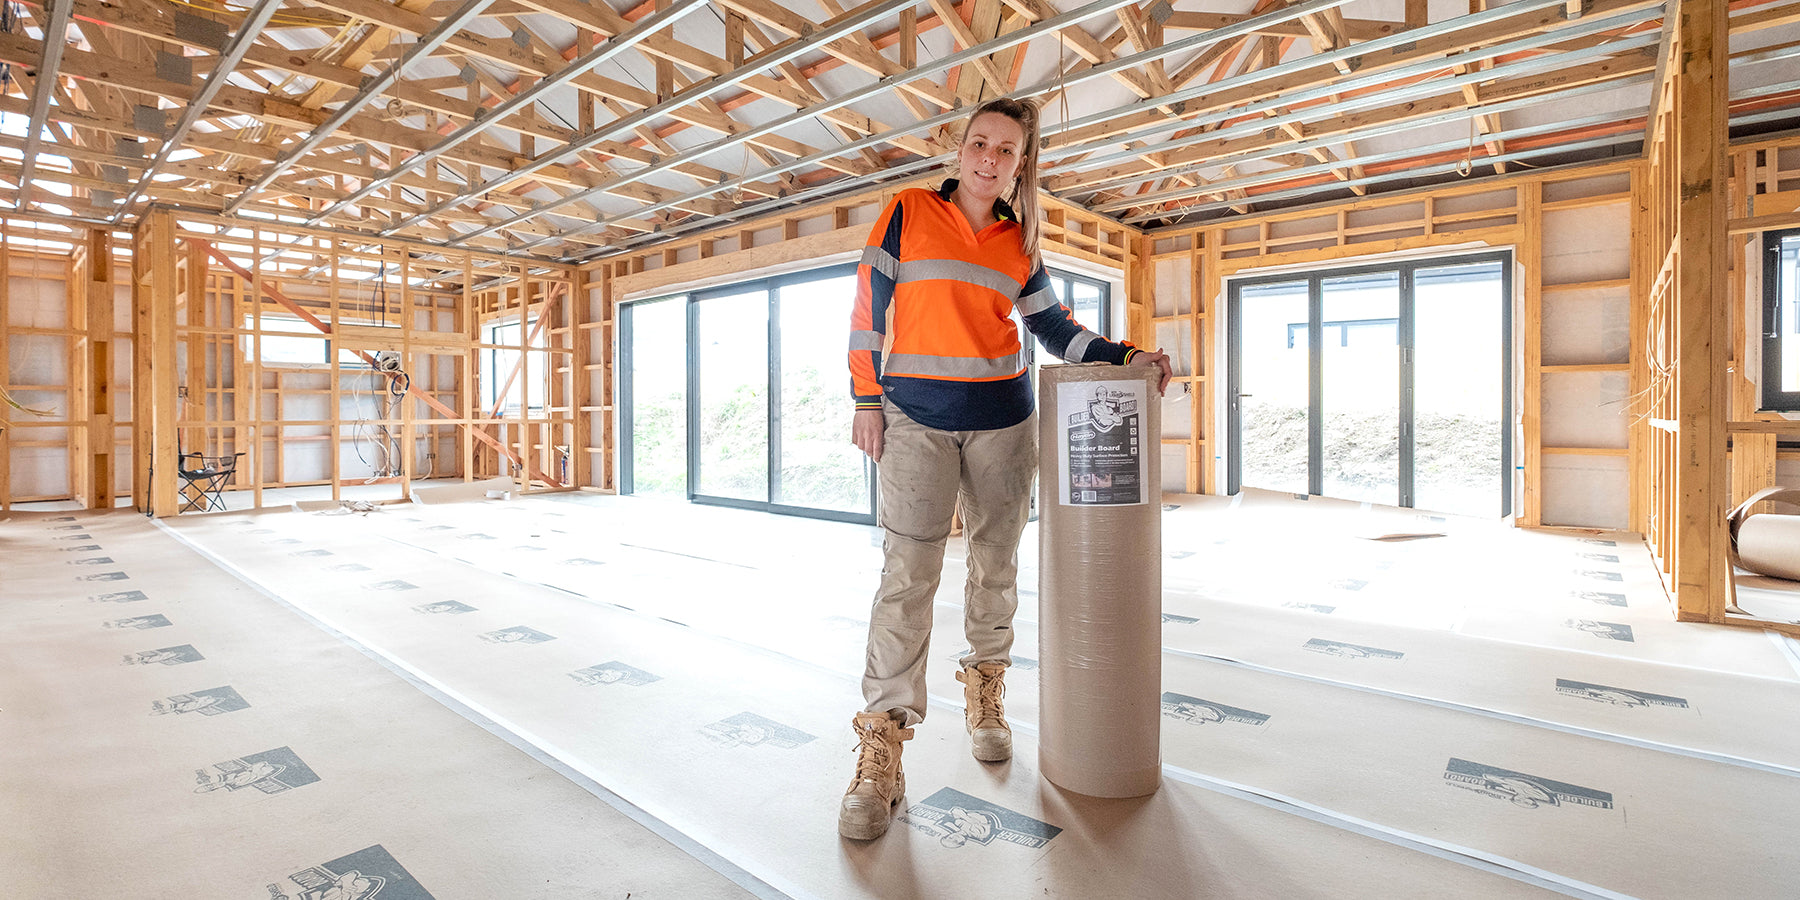 Chelsea, Shebuildsbro, a Queenstown Building Apprentice has installed Builderboard in her new home